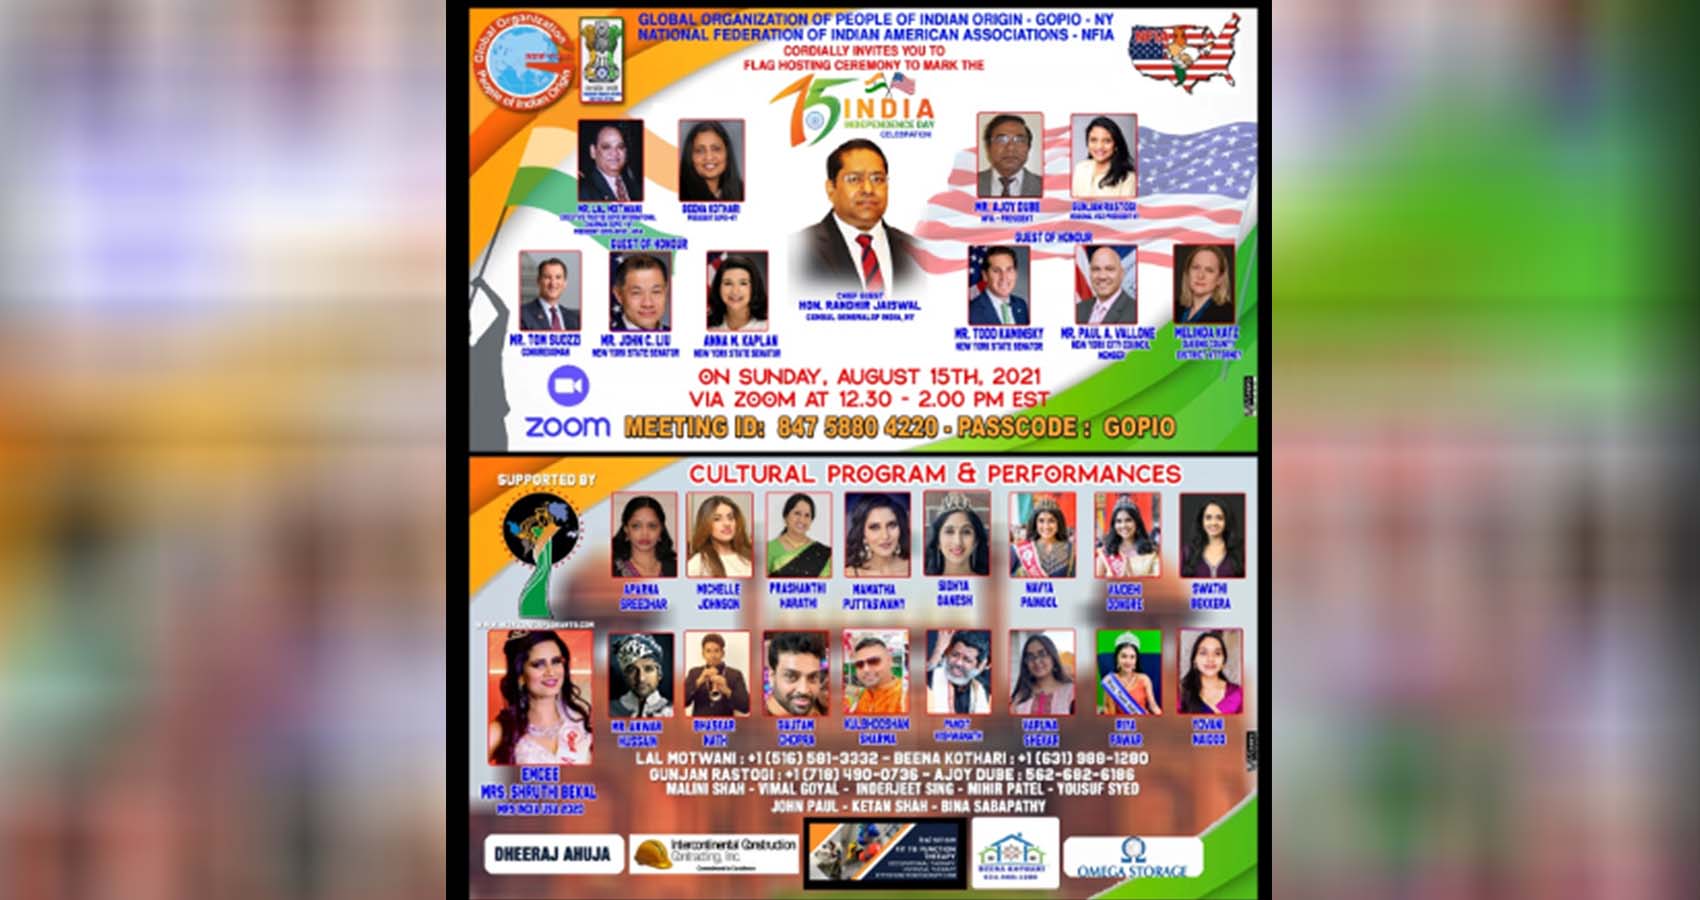 GOPIO New York & NFIA Celebrate India’s 75th Independence Day